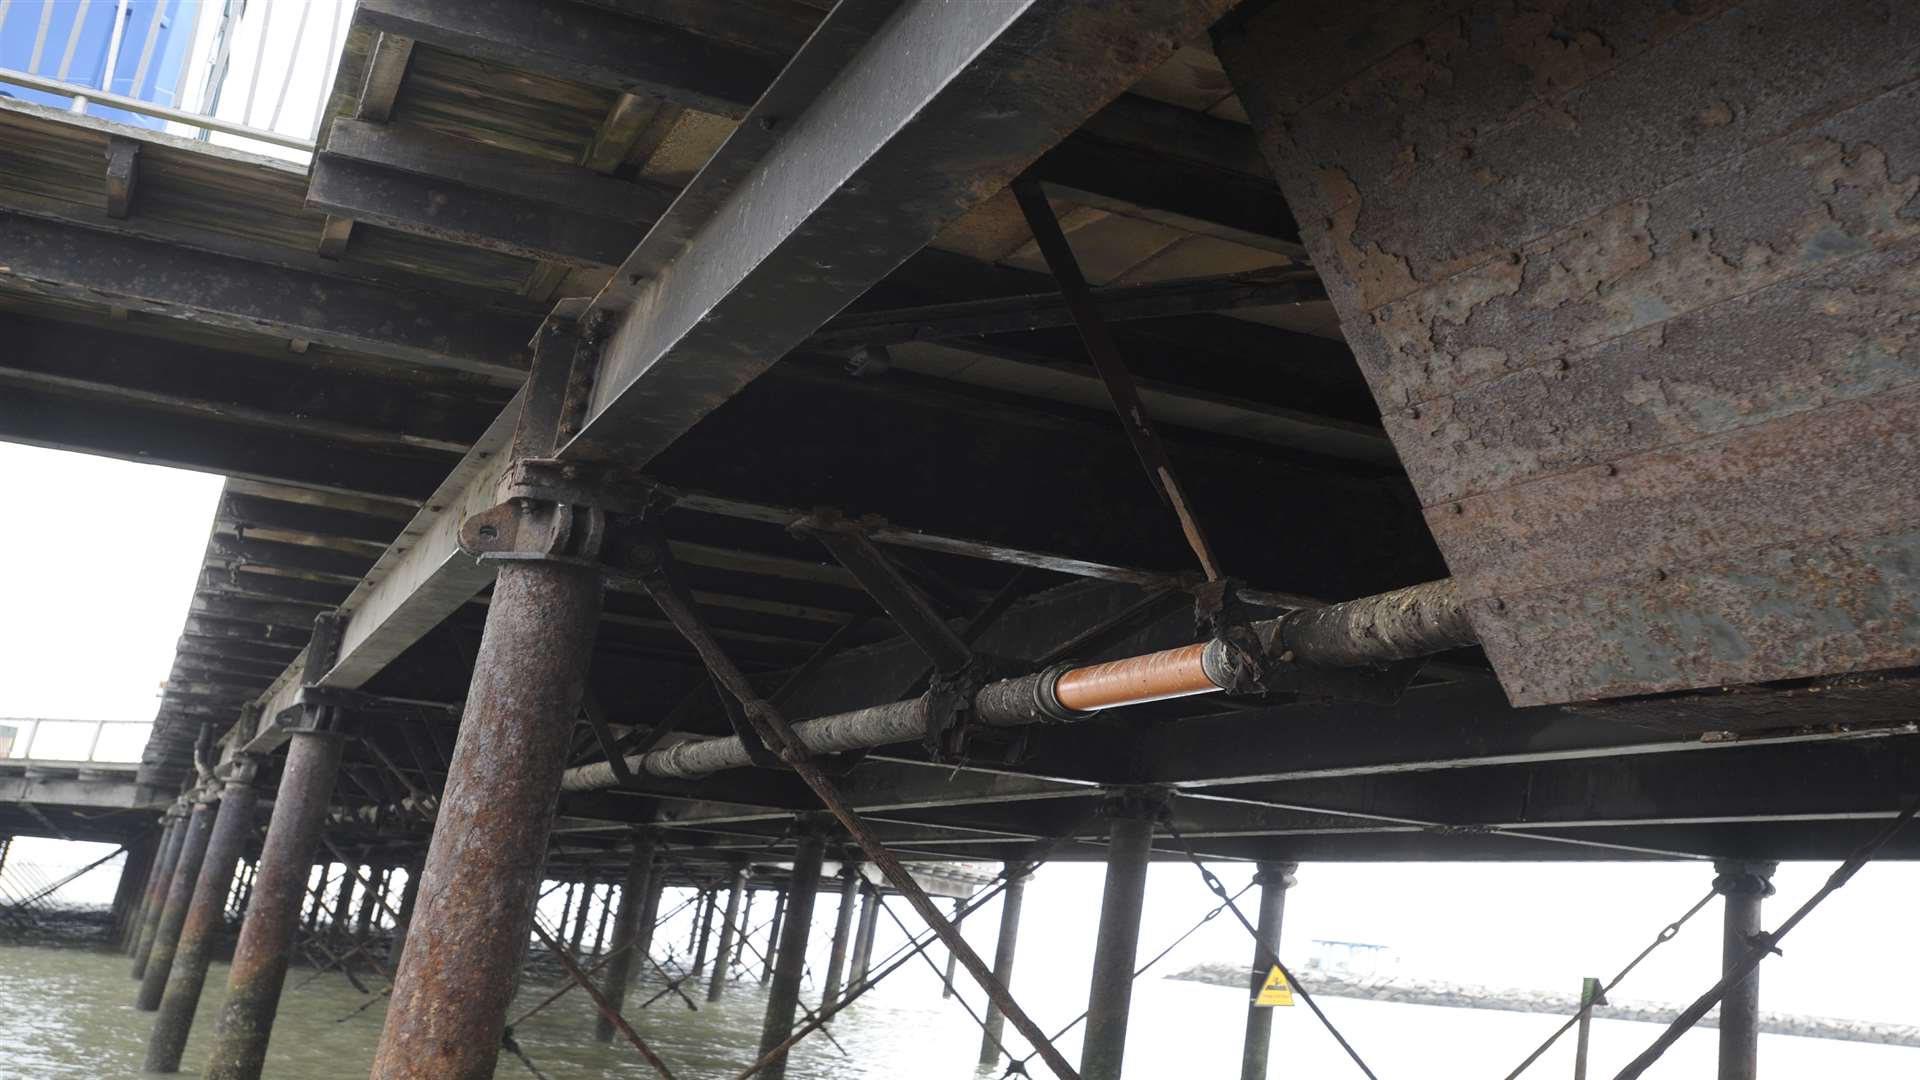 The underside of Herne Bay pier